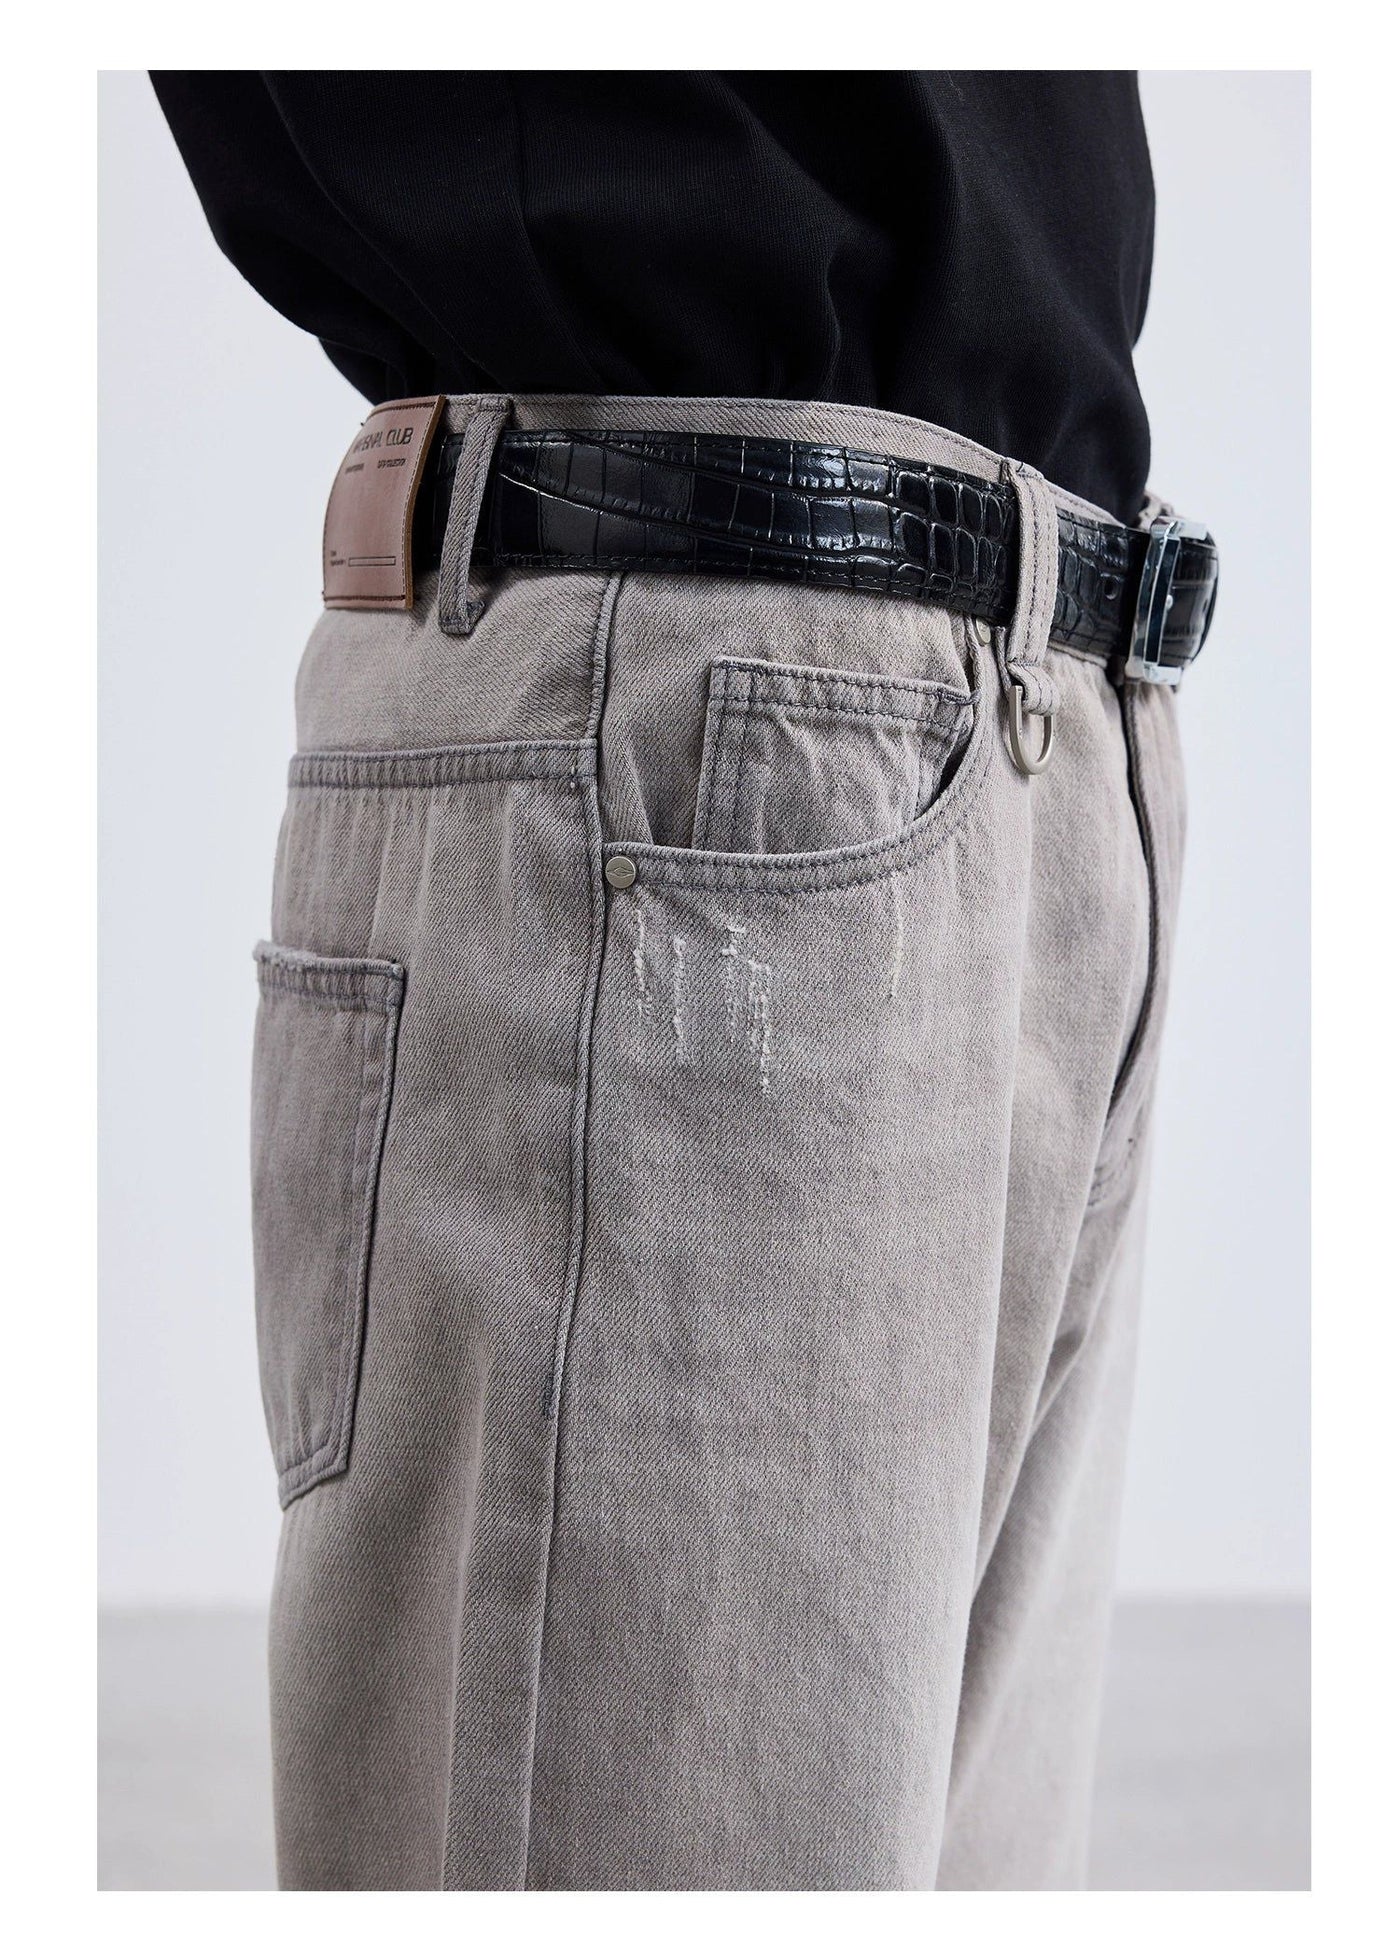 Subtle Raw Edge Jeans Korean Street Fashion Jeans By Terra Incognita Shop Online at OH Vault